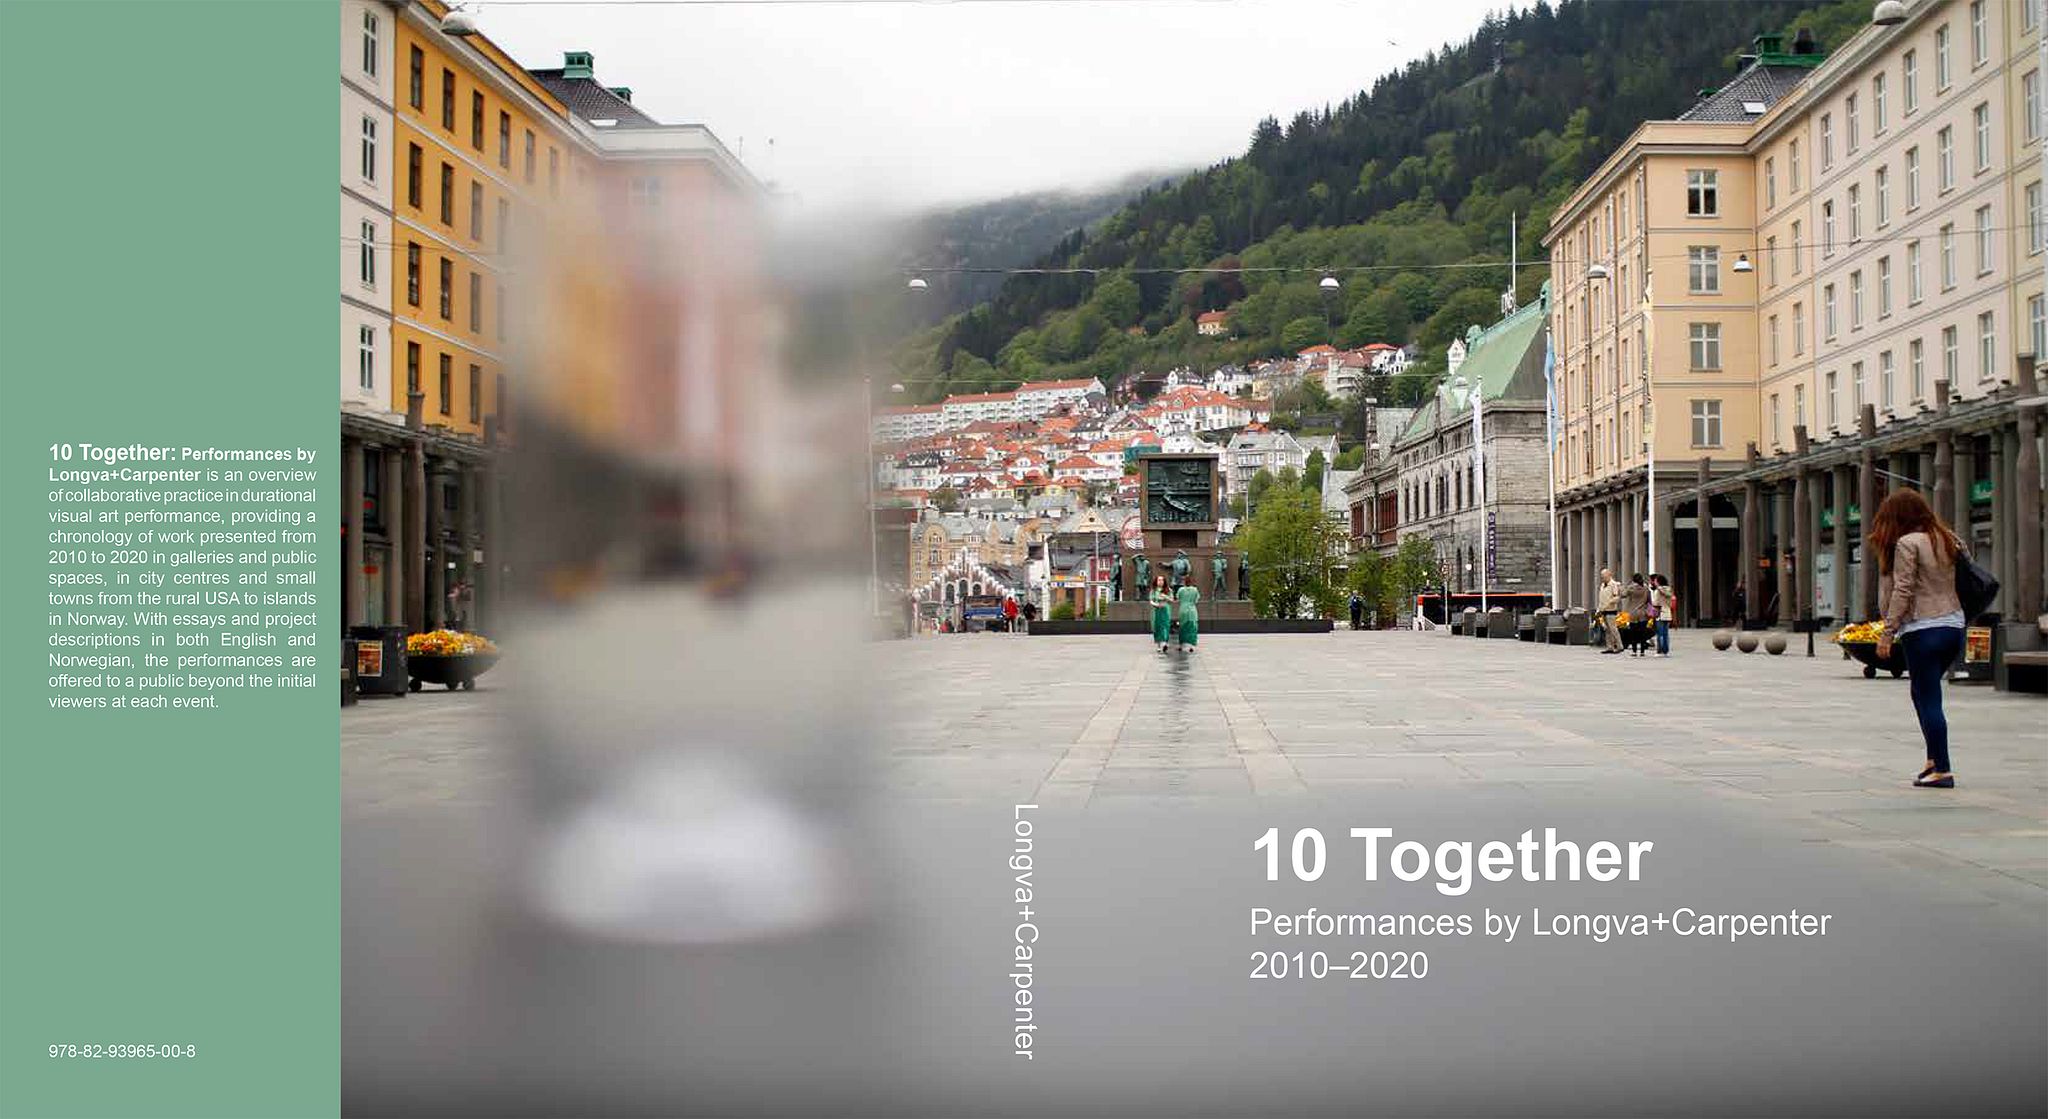 10 Together: Performances by Longva+Carpenter